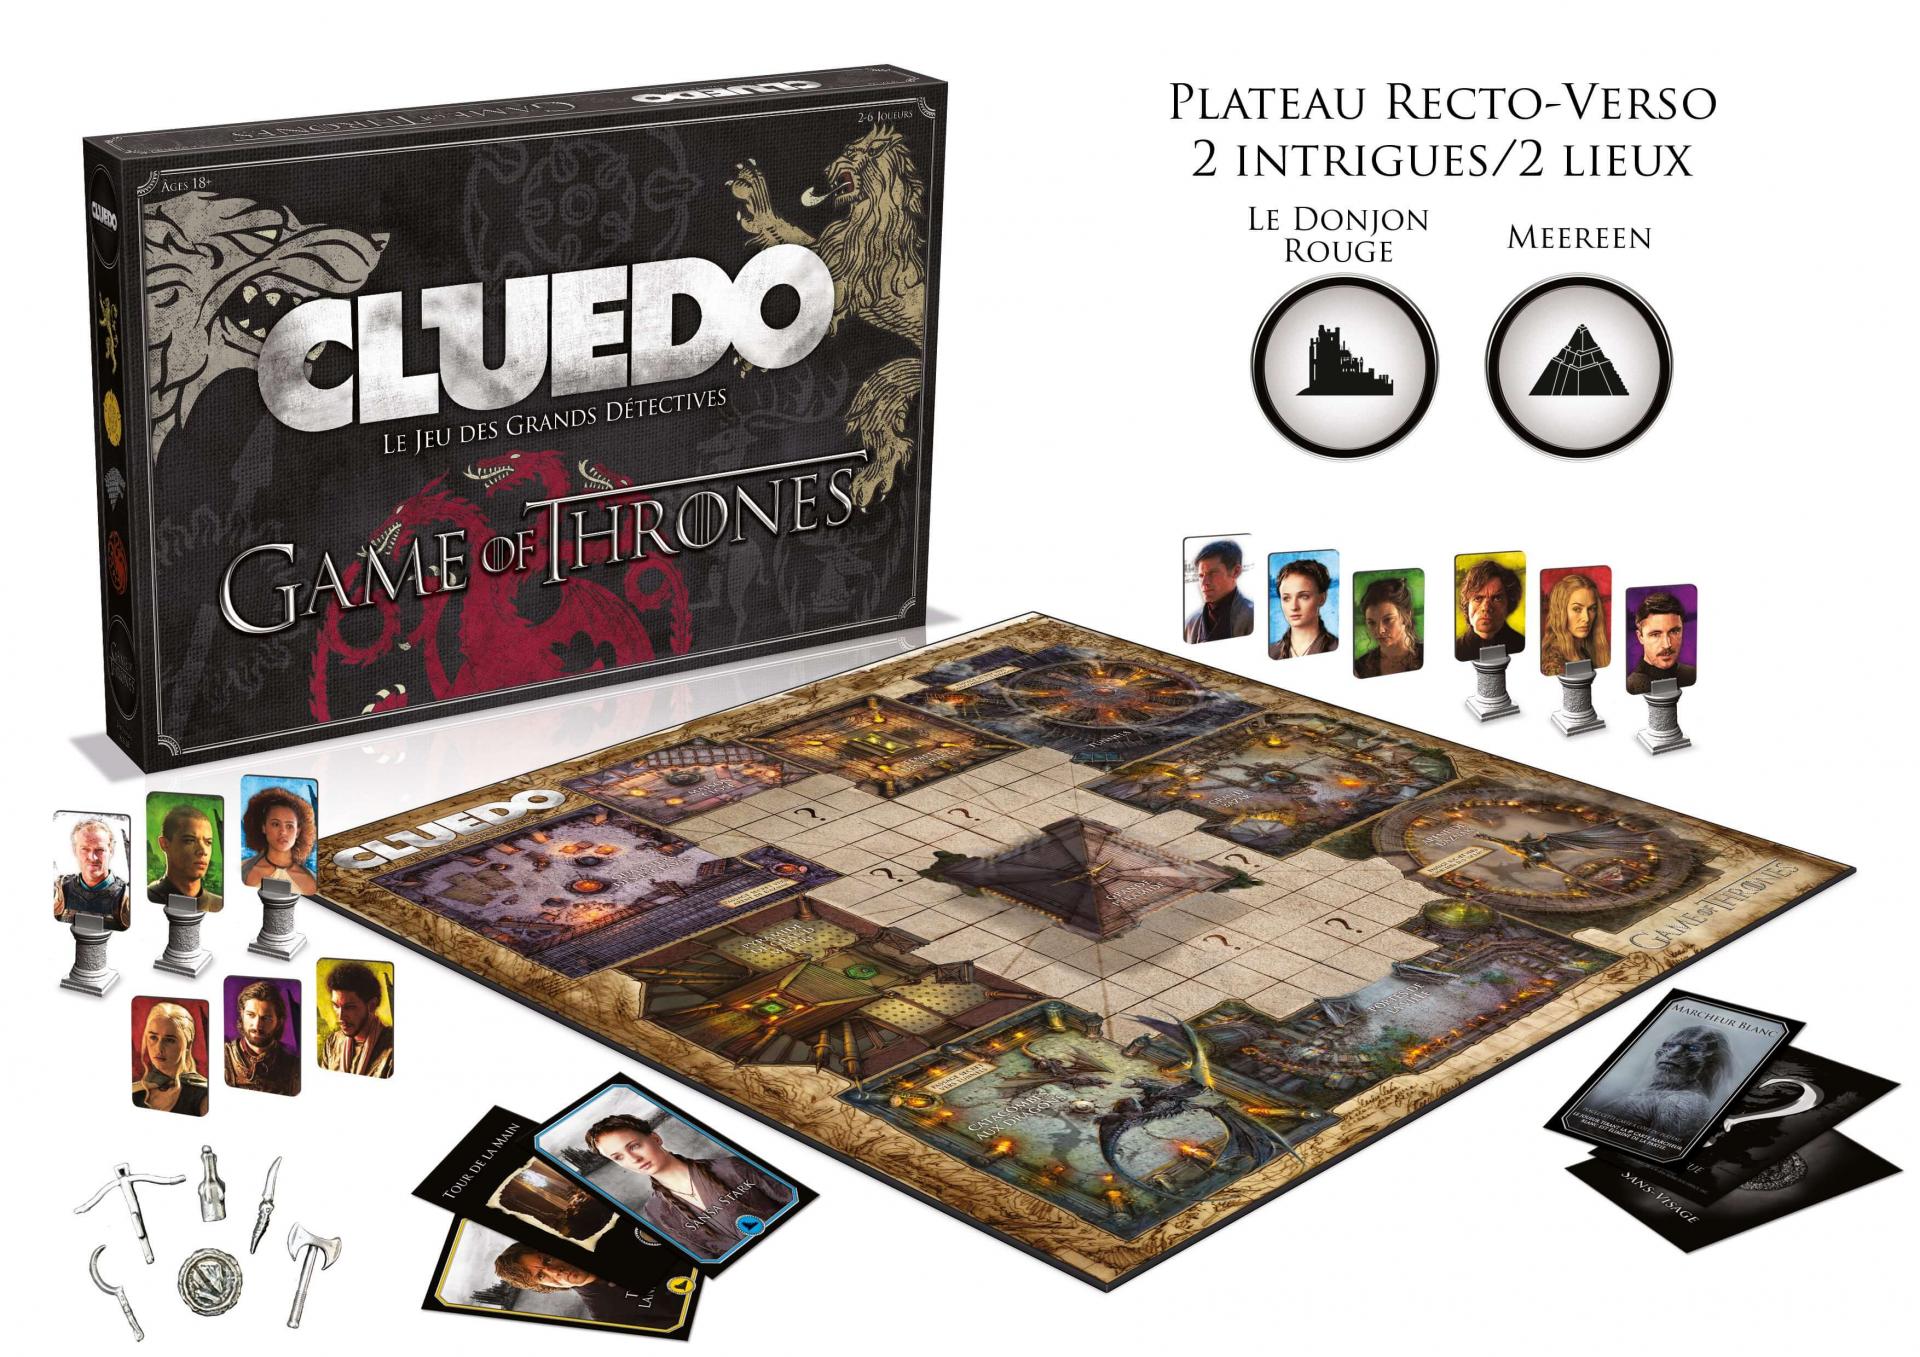 Cluedo Game of Thrones - Shop for geek